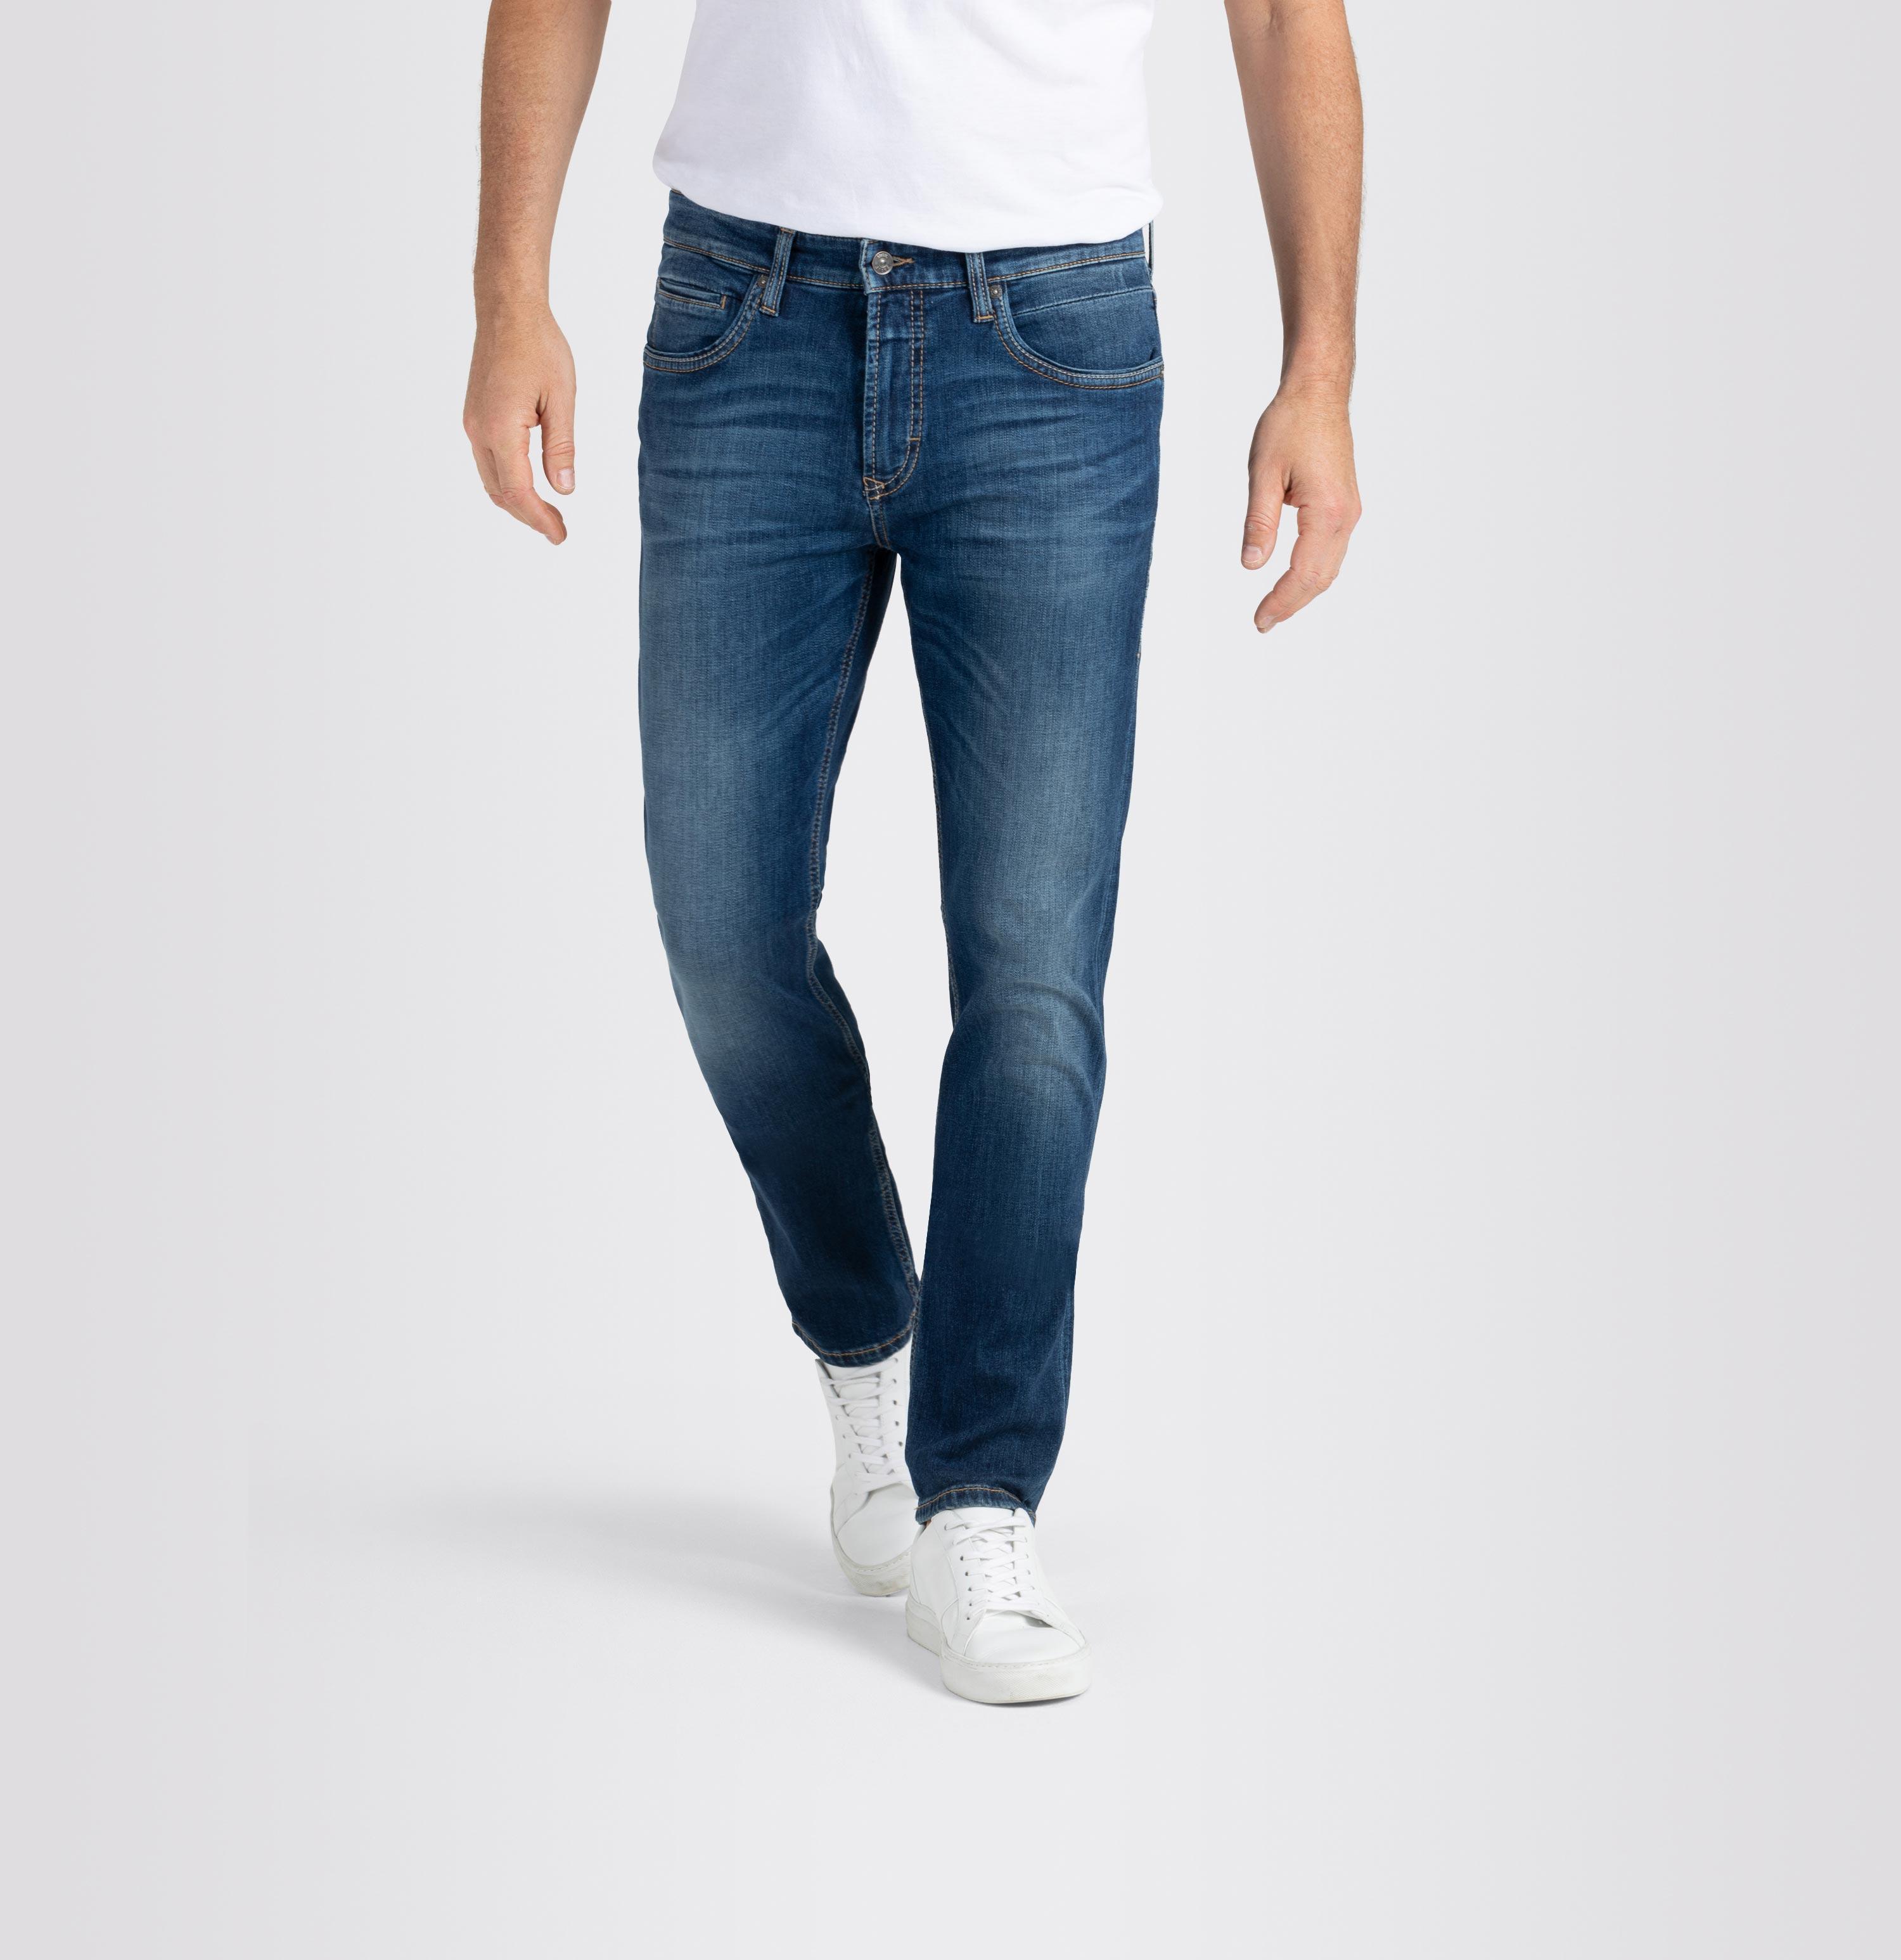 FI Jeans Workout, - Arne | Pipe, H662 blue MAC Shop dark Pants, Men